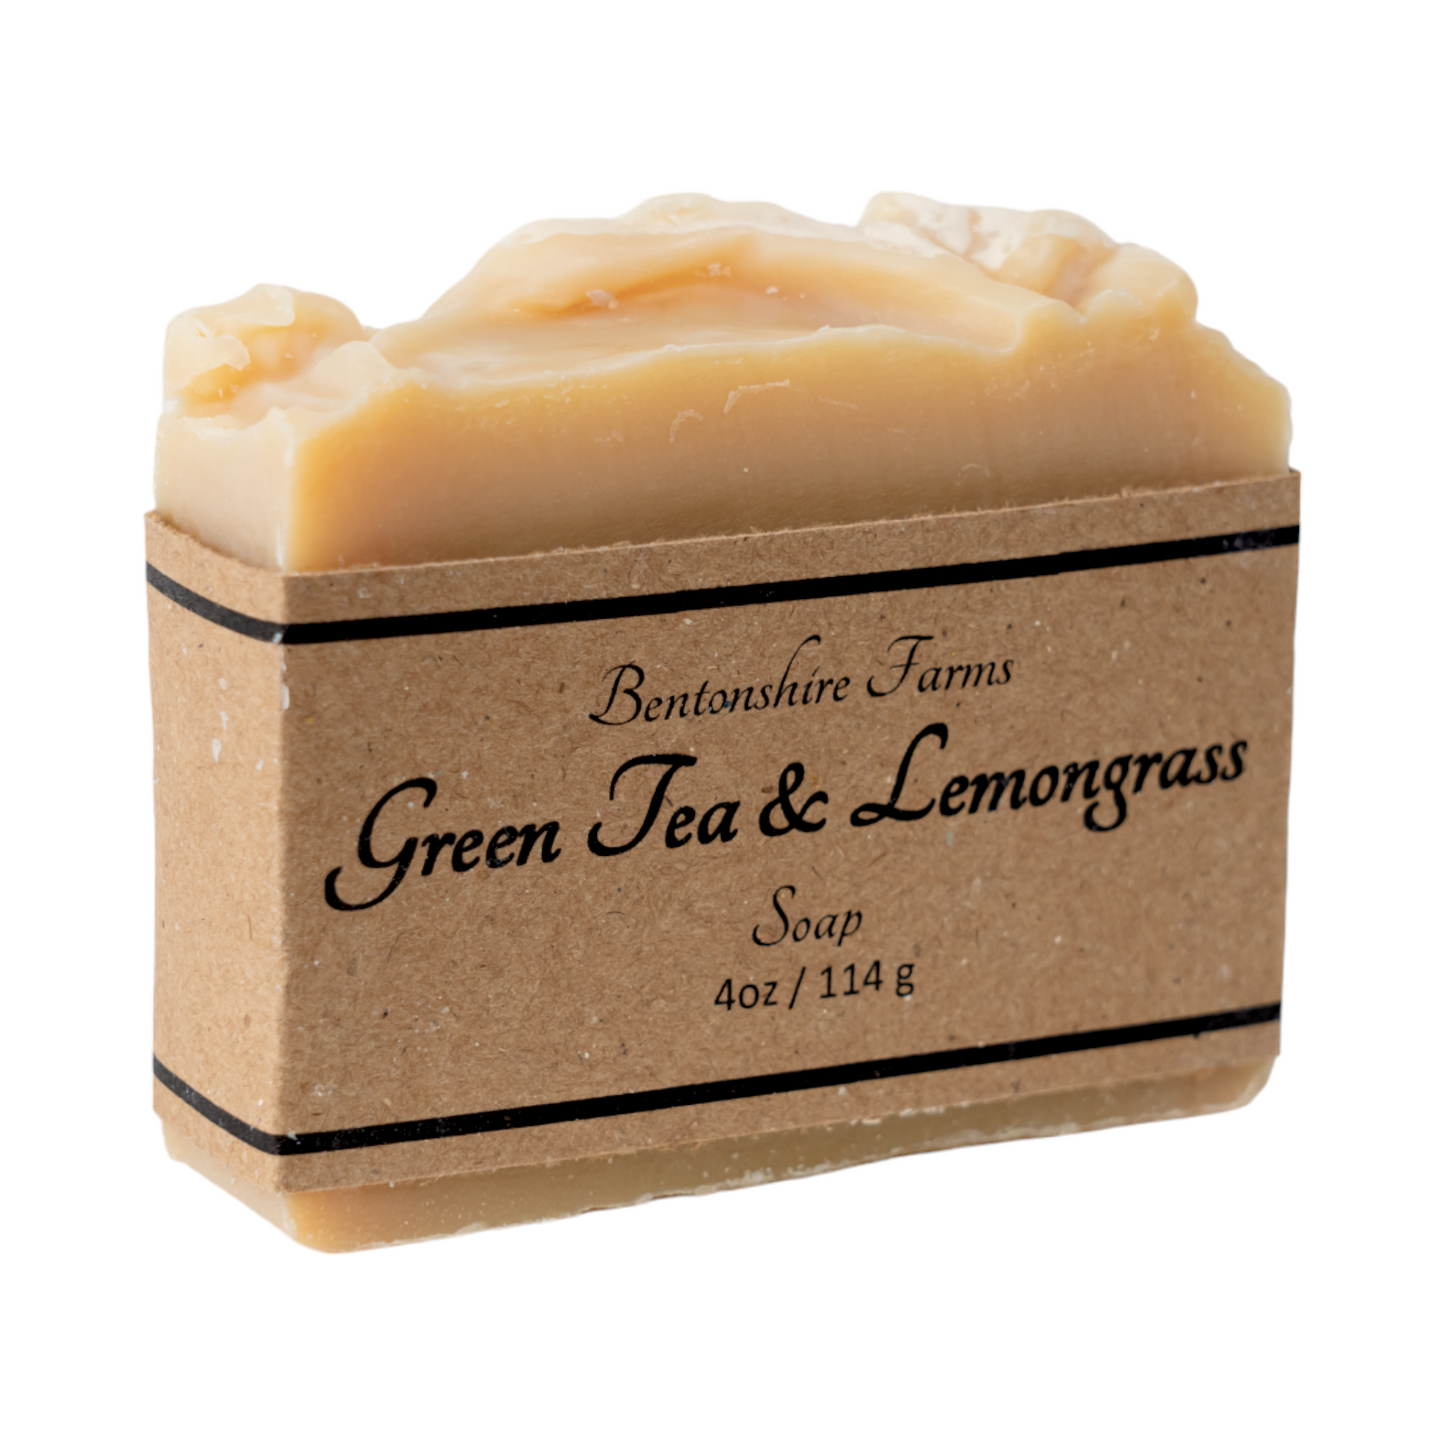 Green Tea and Lemongrass Soap